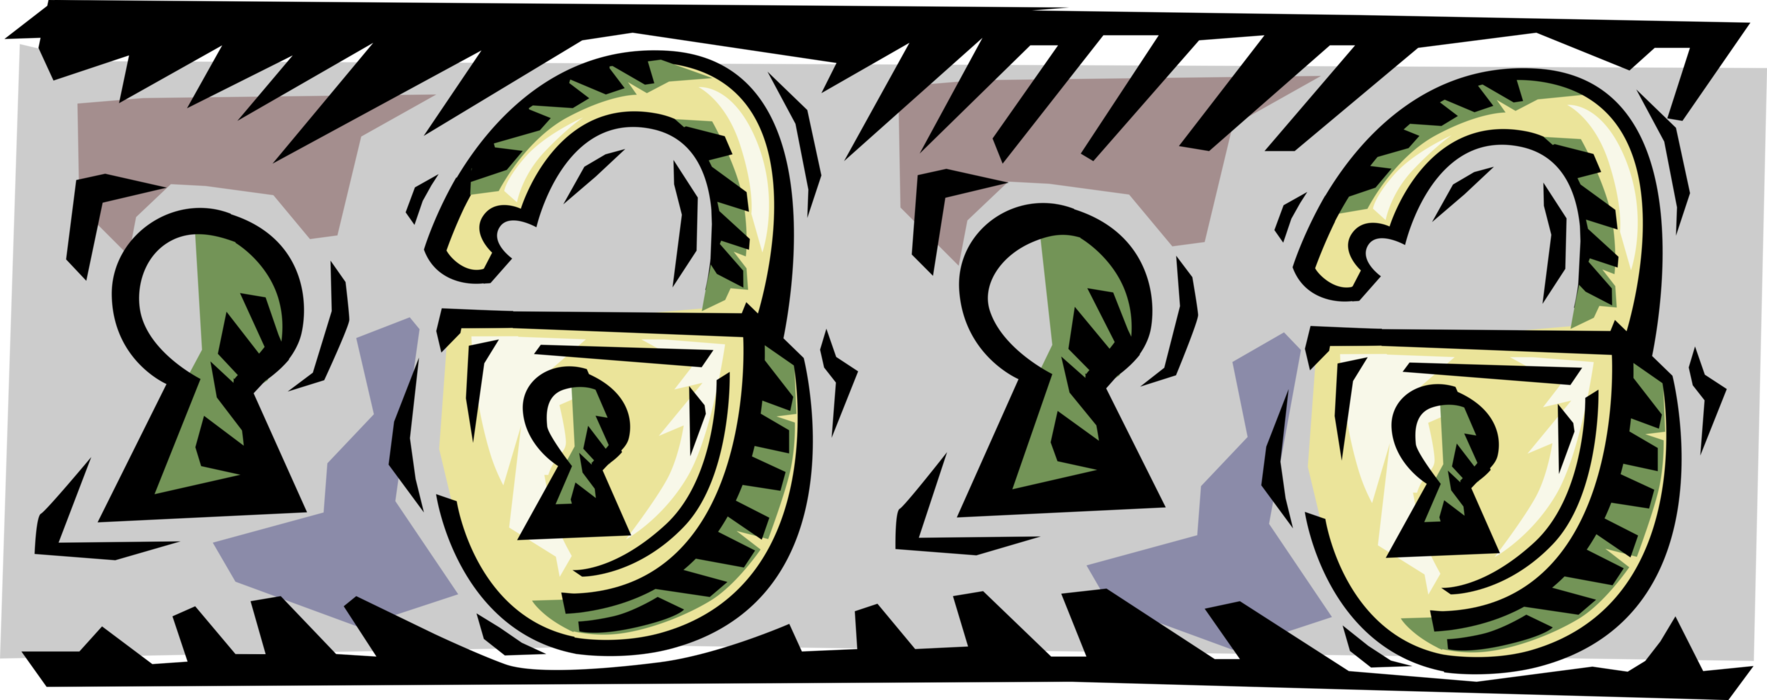 Vector Illustration of Padlock Security Locks with Keyholes for Keys